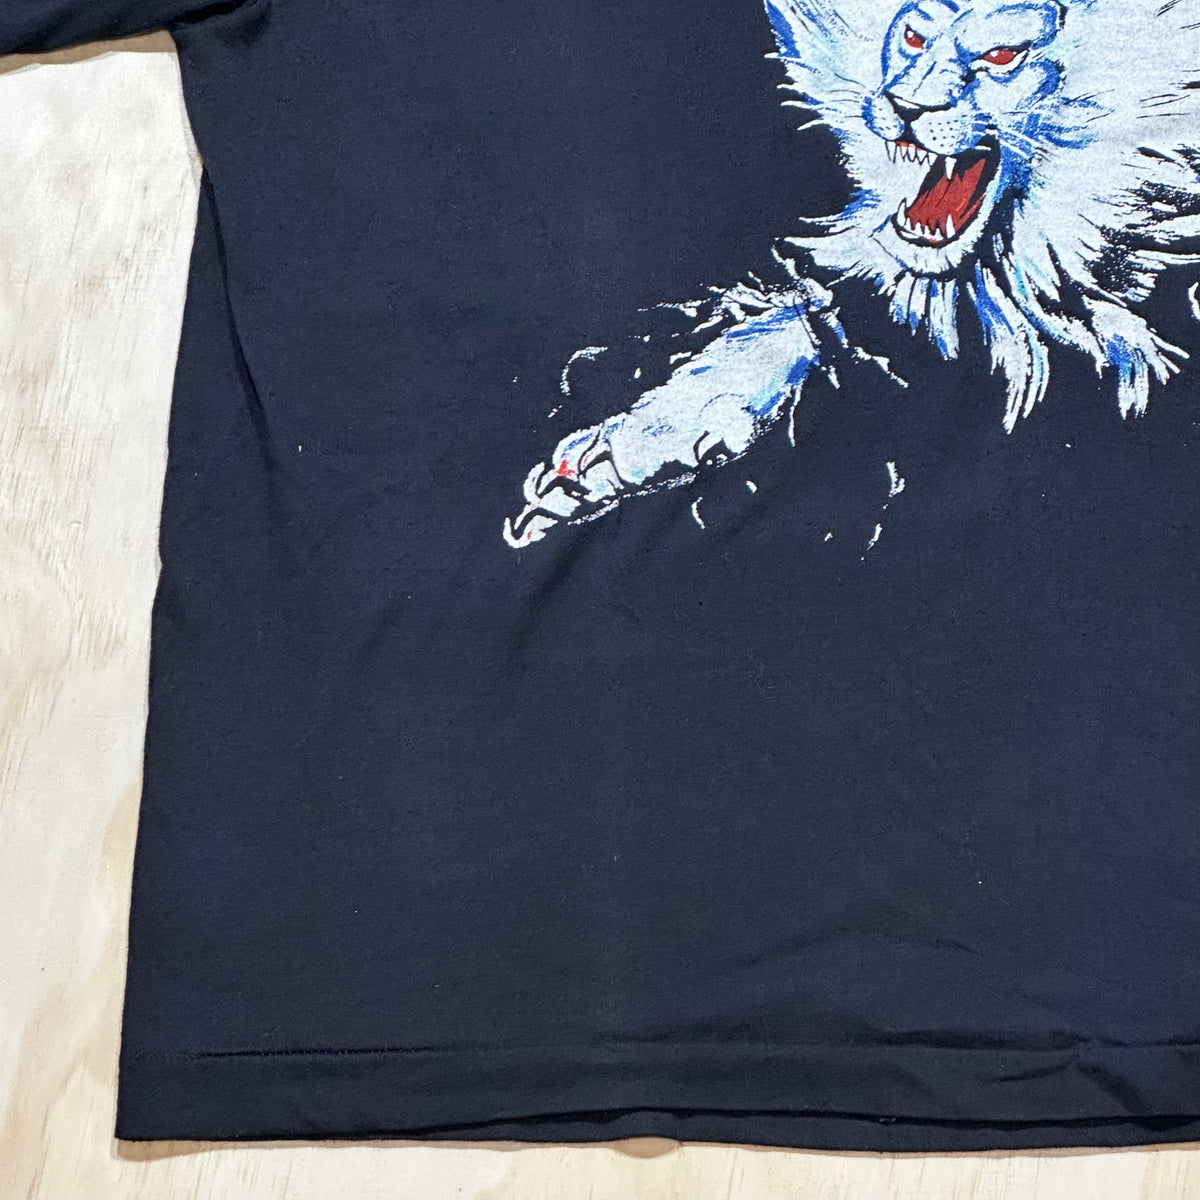 1989 Vintage White Lion Heavy Metal Big Game Tour shirt